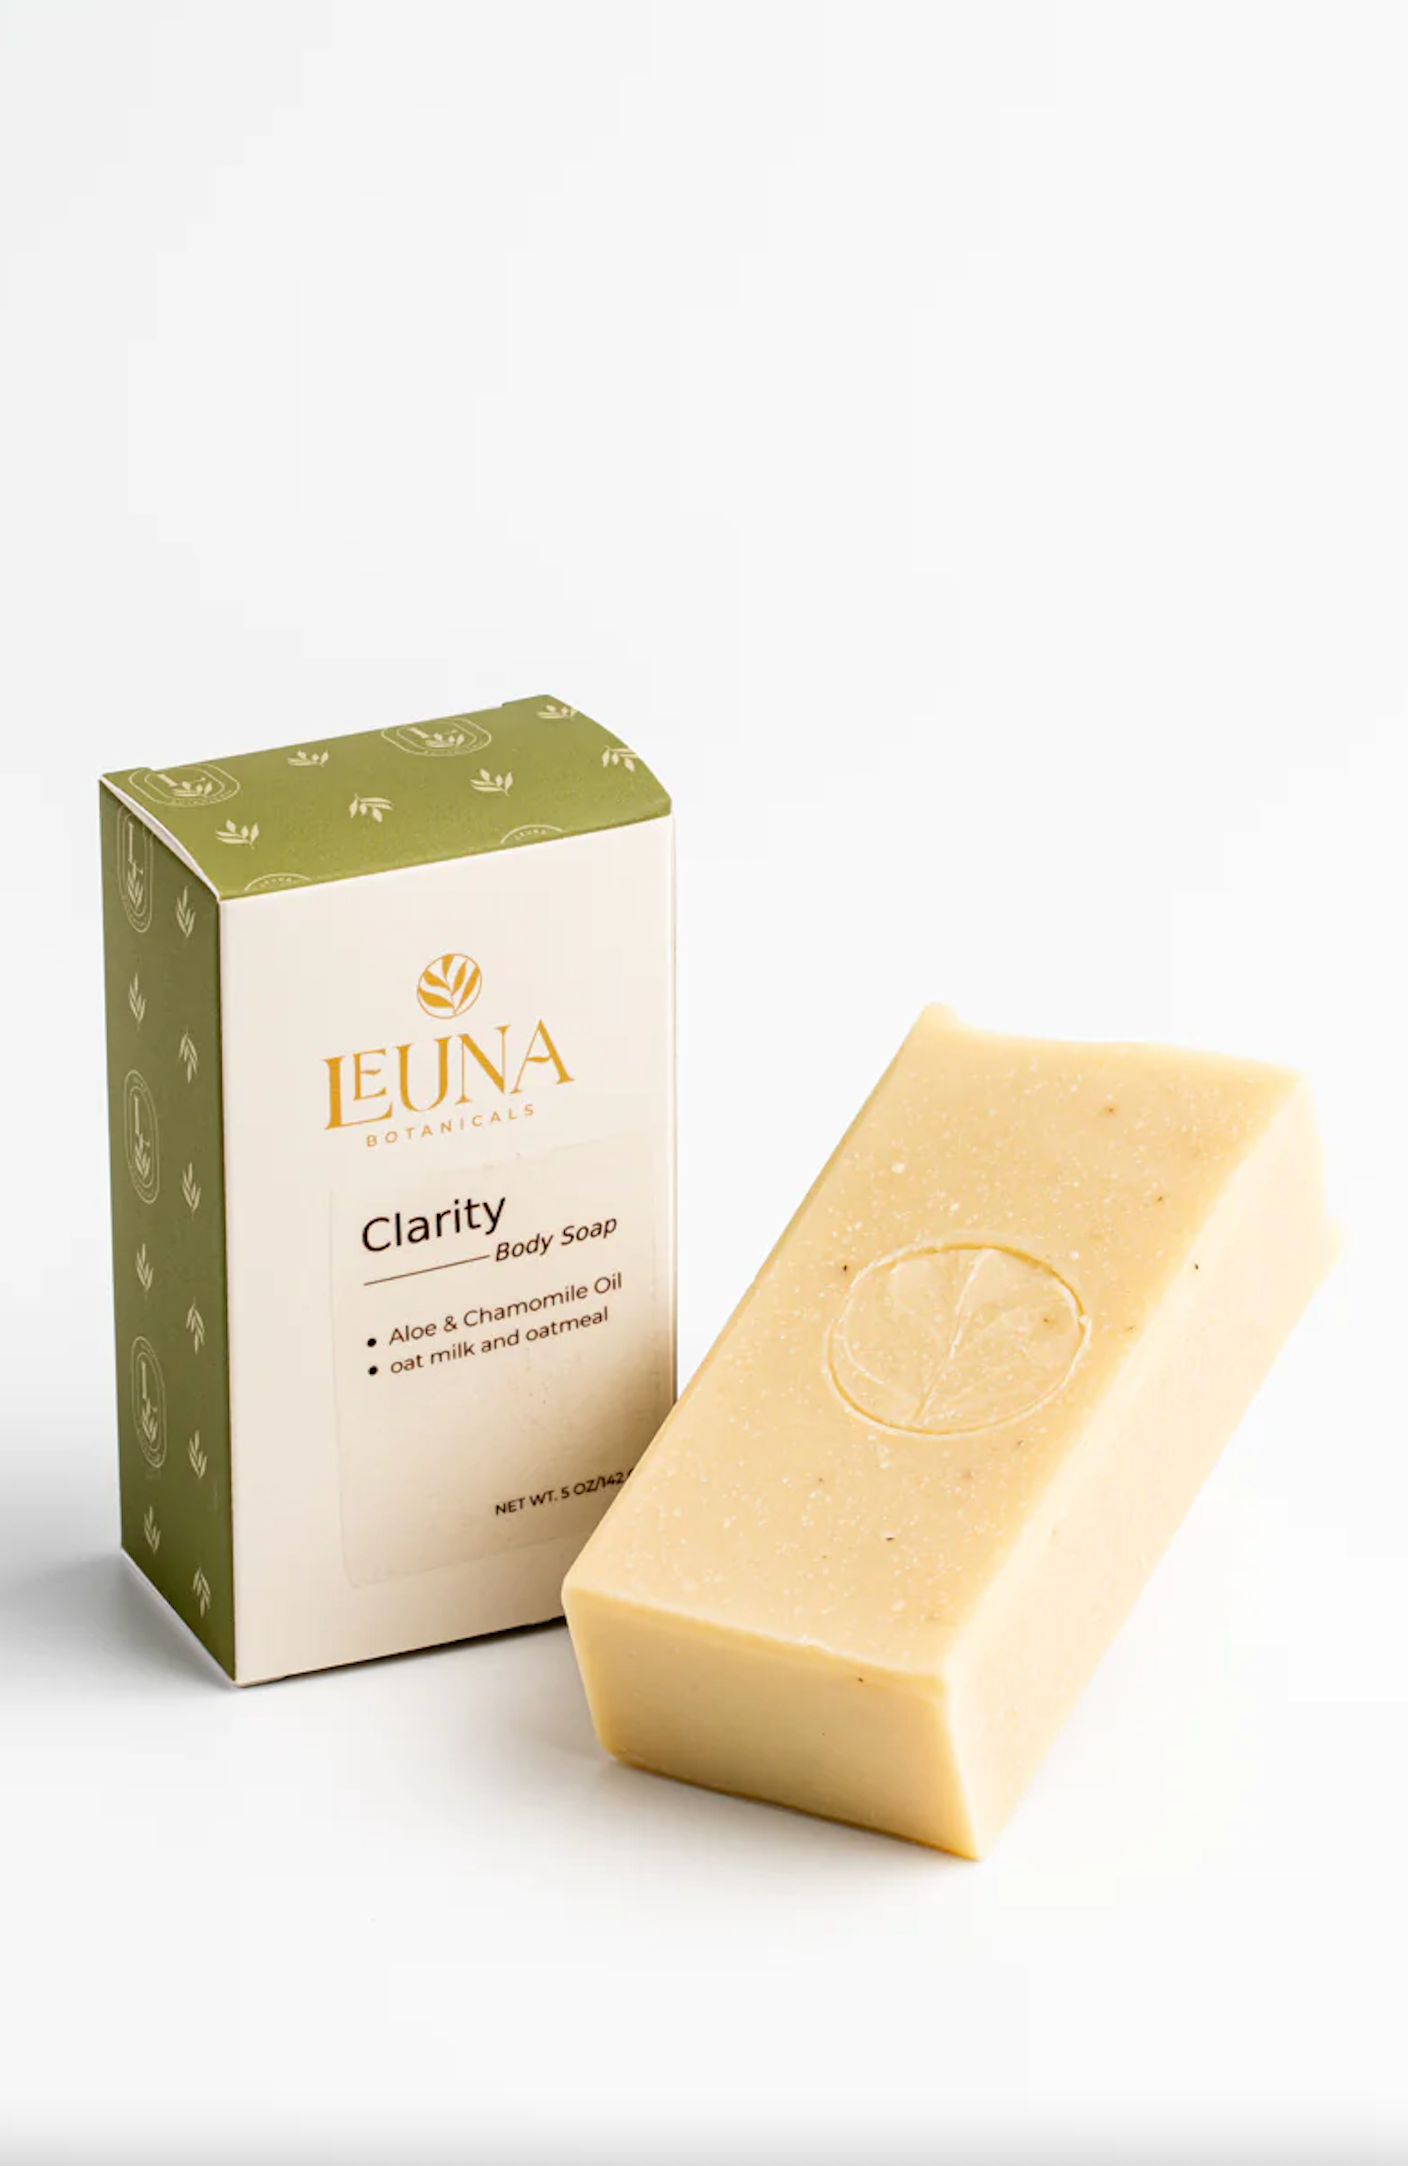 Clarity Body Soap - Aloe, Chamomile Oil, Oatmilk and Oatmeal